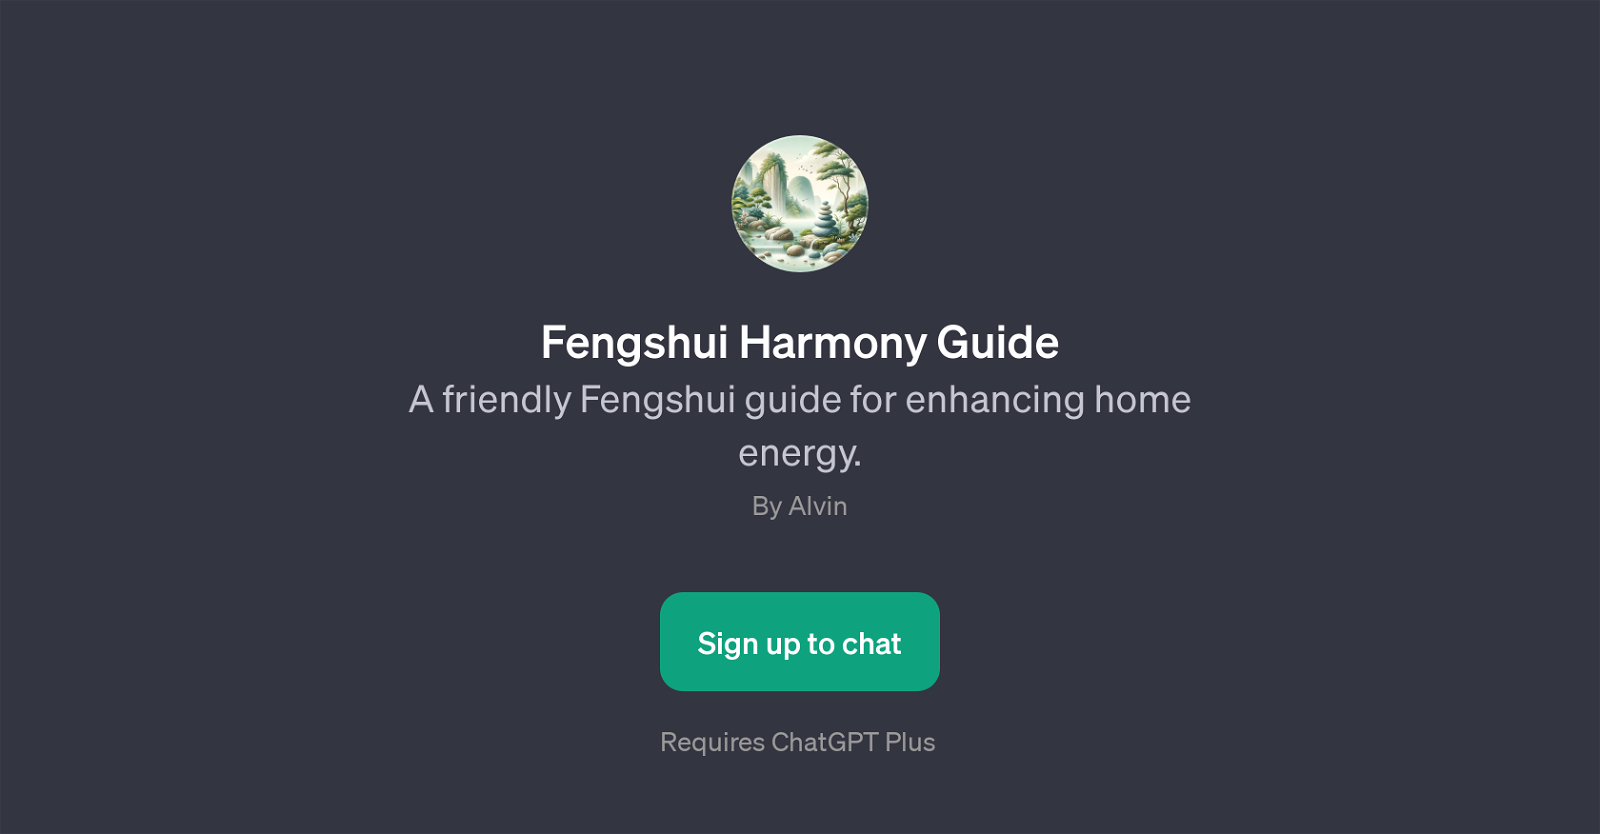 Fengshui Harmony Guide website